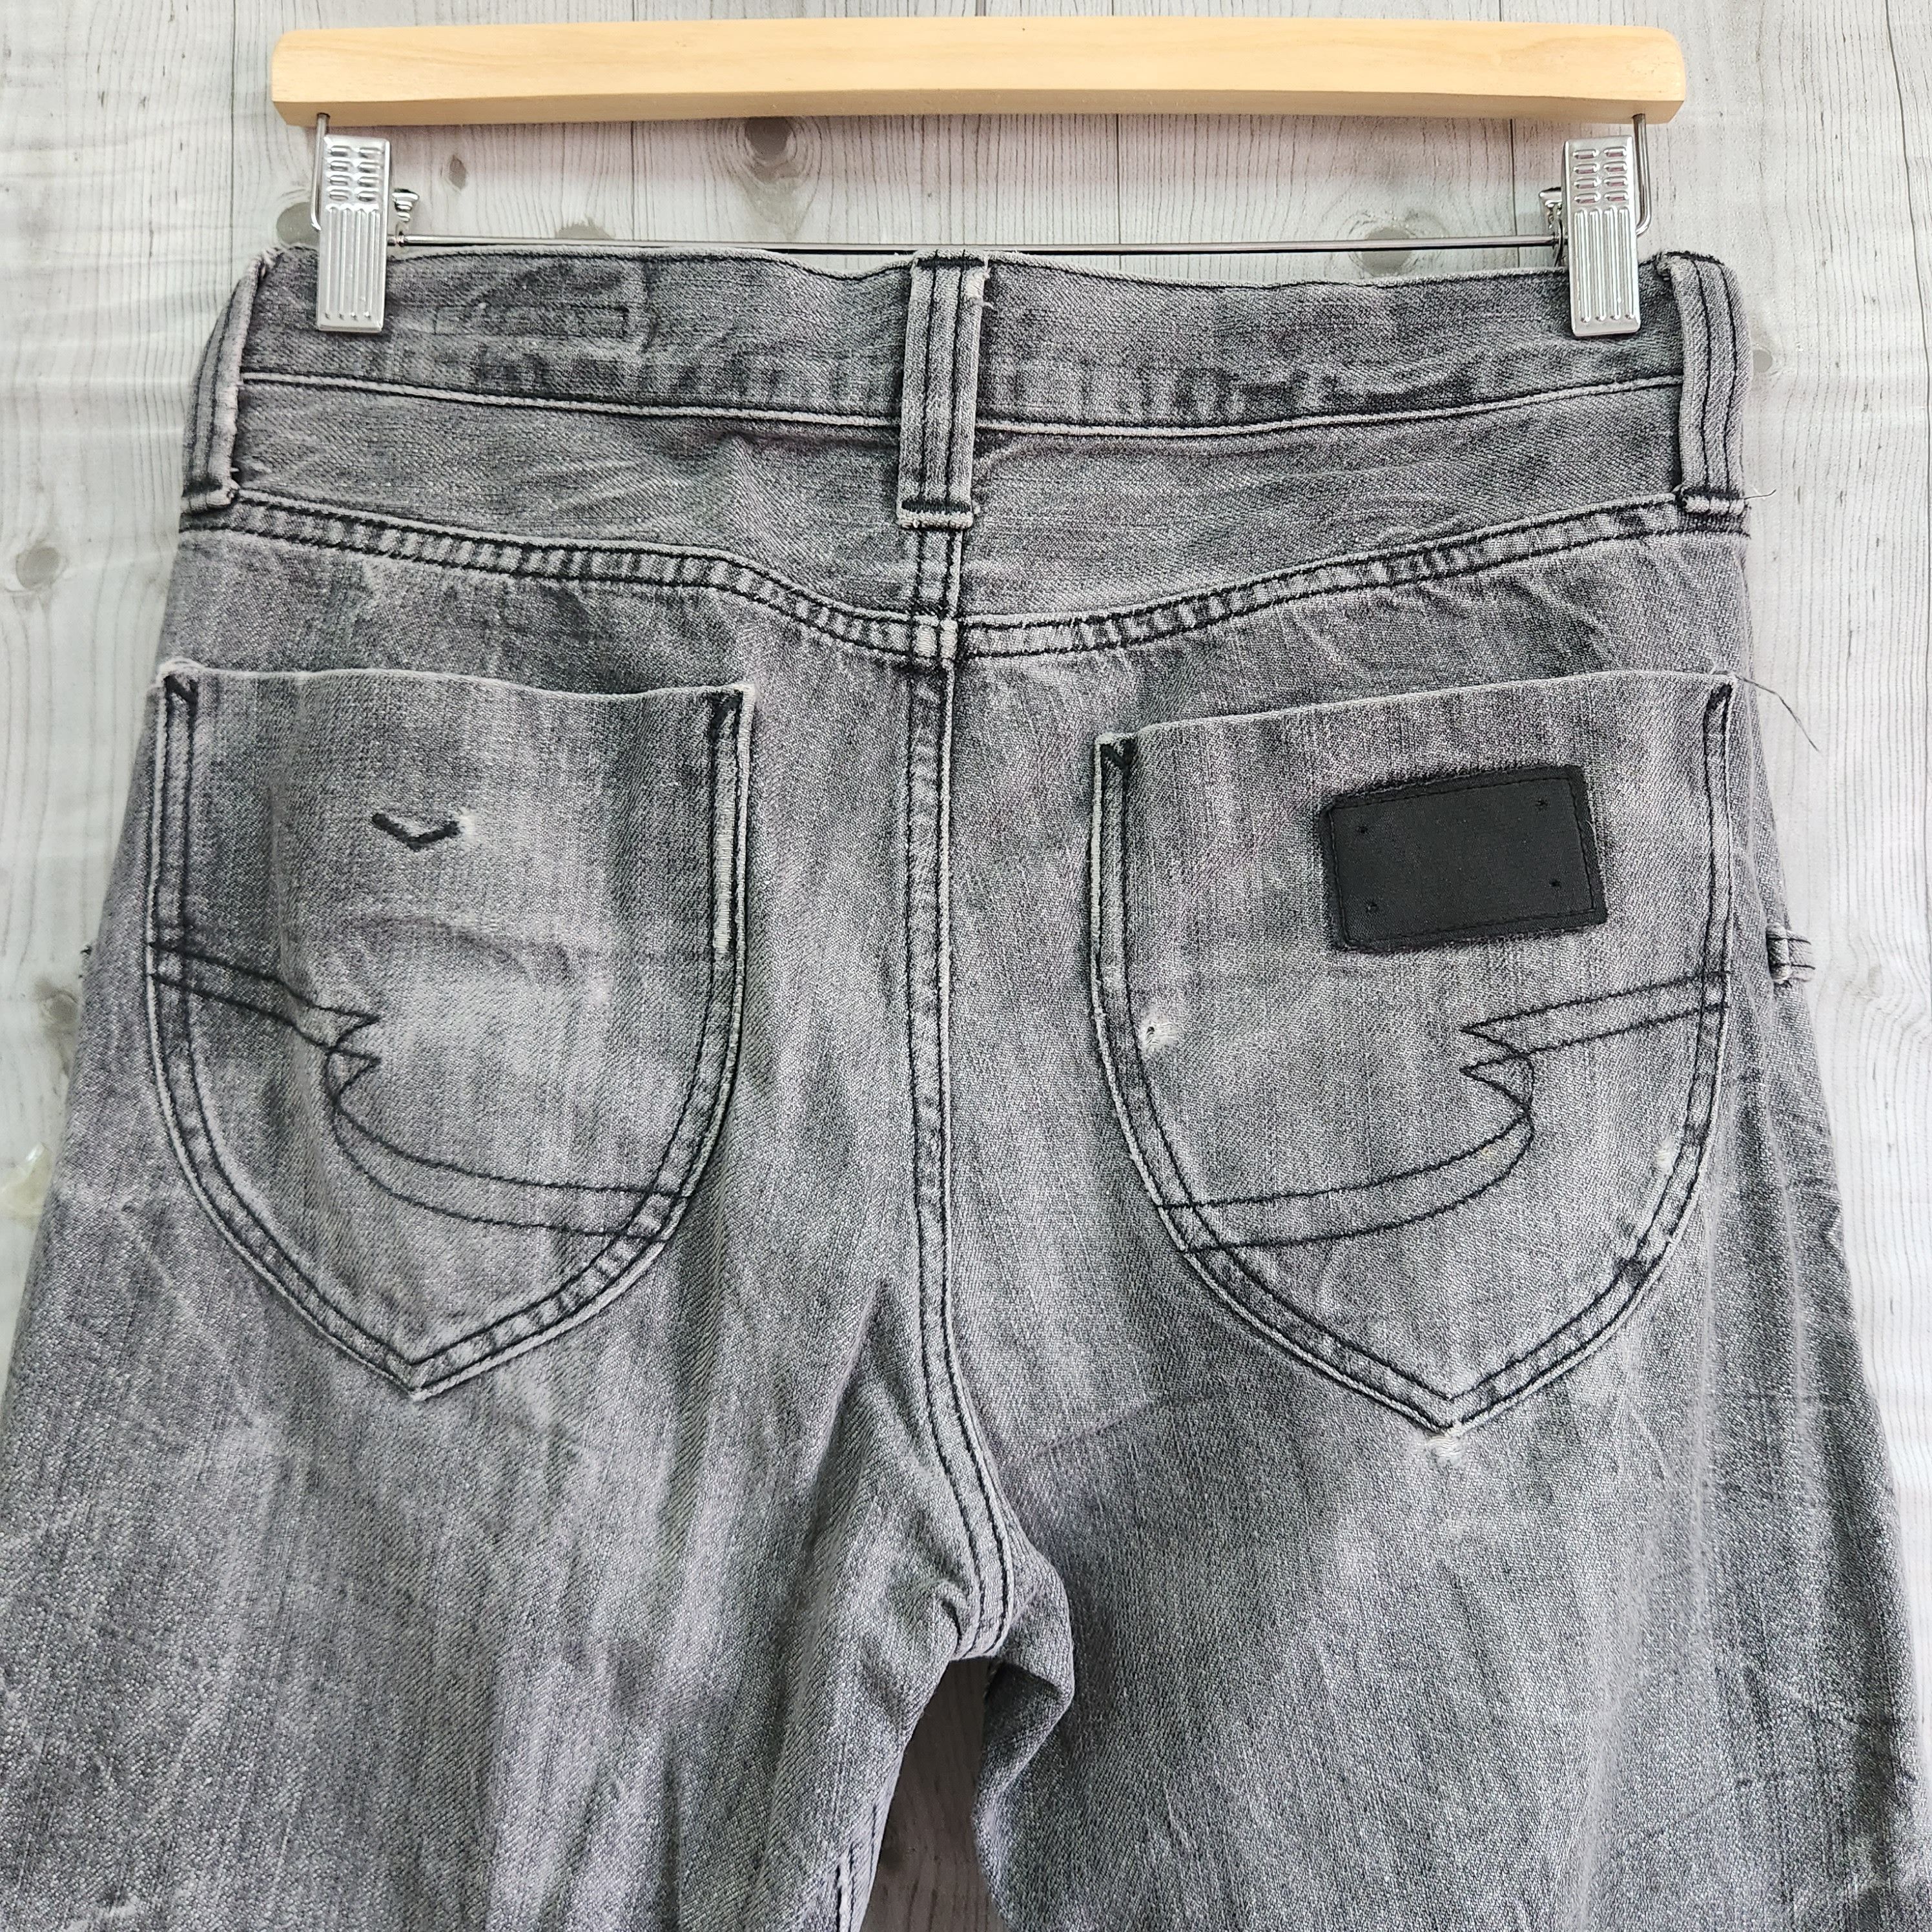 Semantic Design Hysteric Glamour Japan Denim Jeans - 11